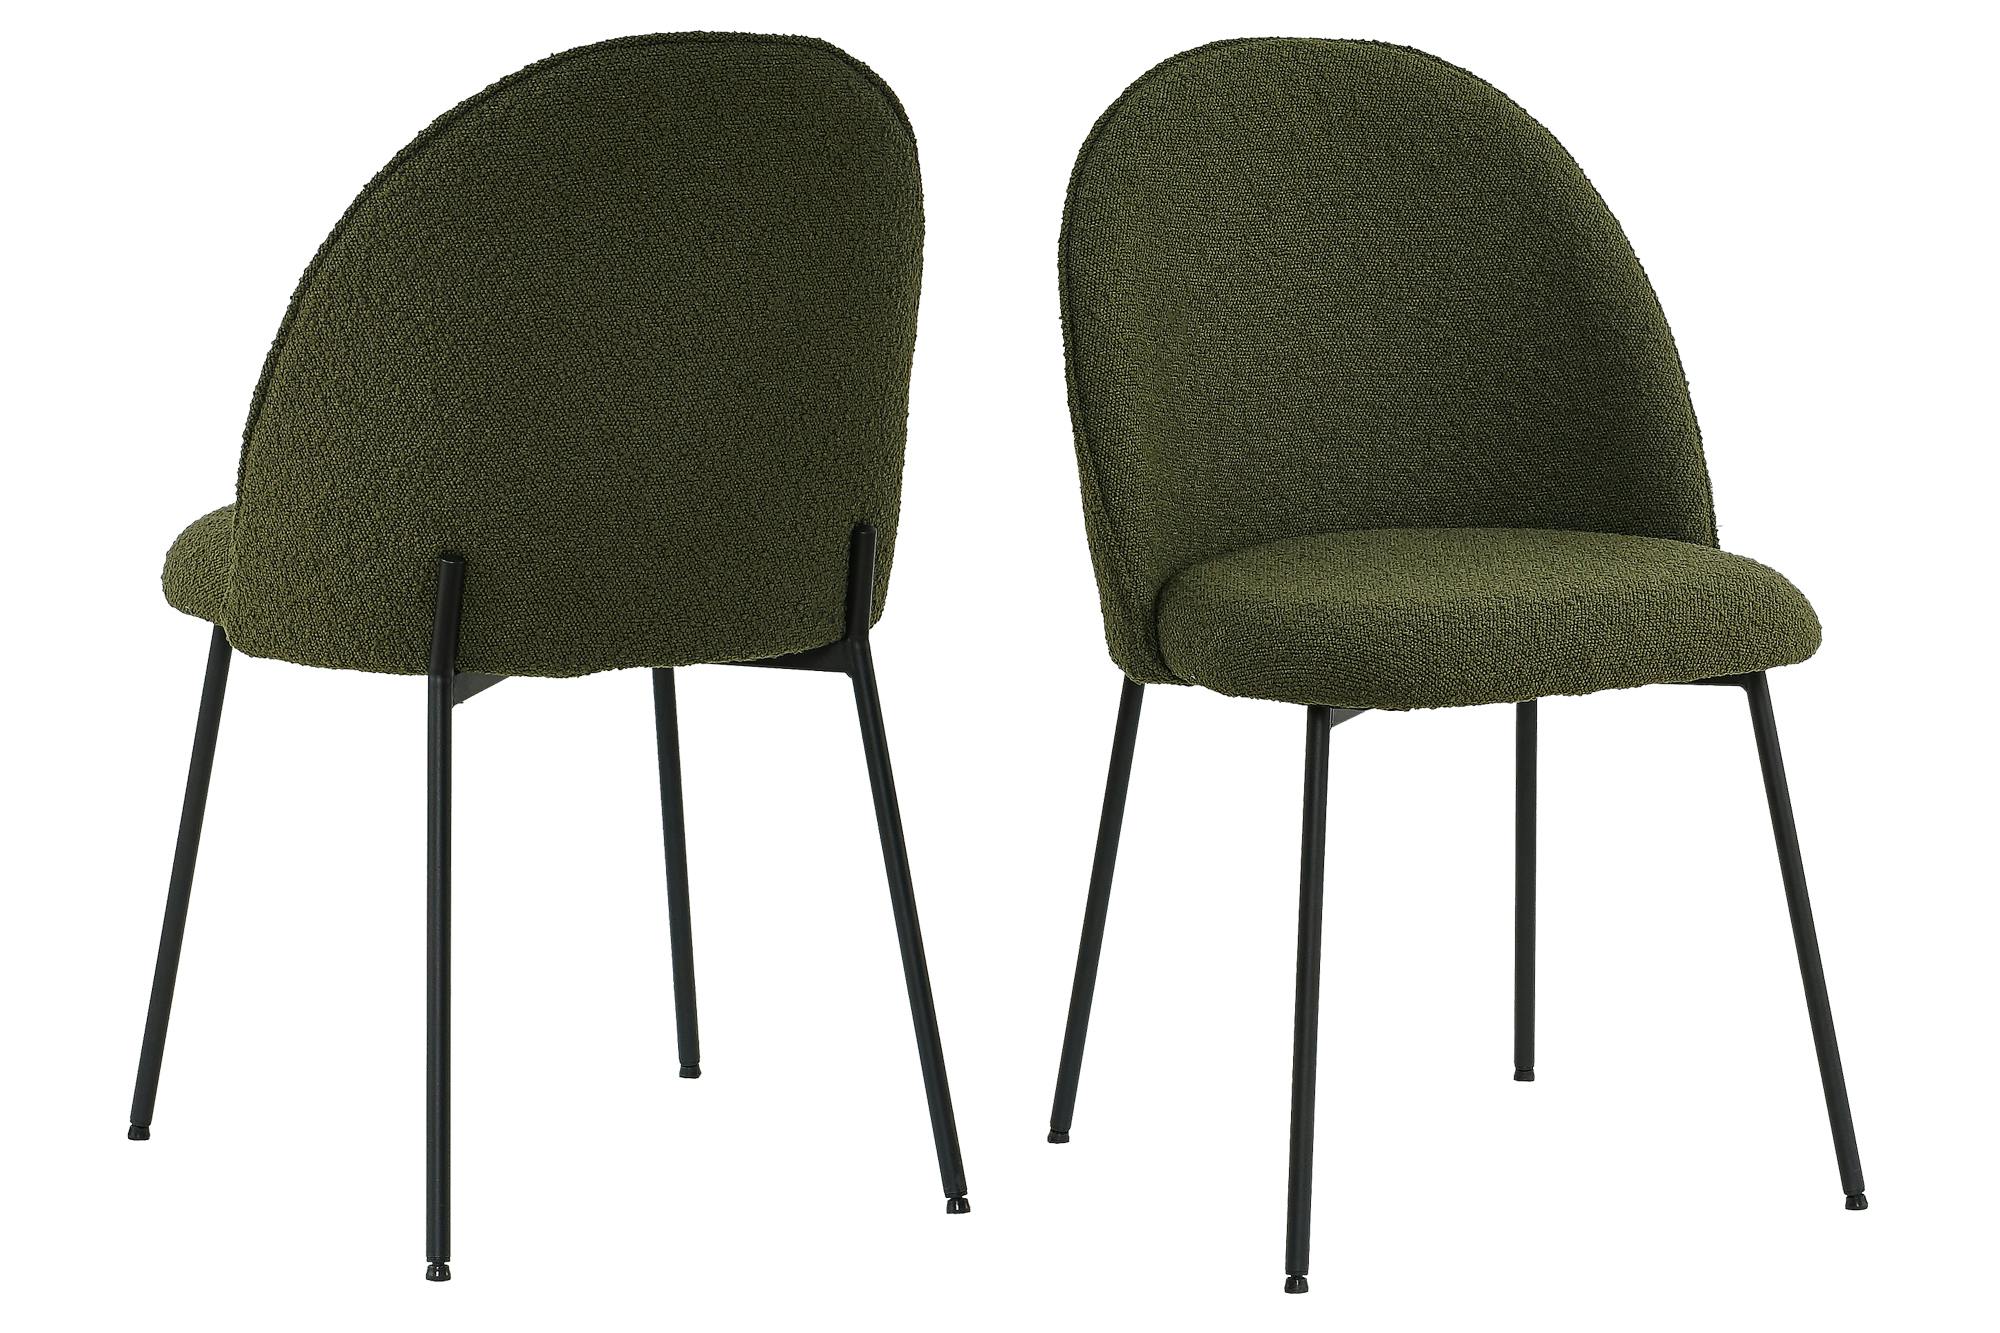 SIT Möbel Tom Tailor Stuhl 2er-Set B57xT54xH52cm SIT&CHAIRS METRO | Marktplatz Pad Beine T-Bouclé grün| |Serie schwarz | Metall | |02412-03 Chair | gepolstert